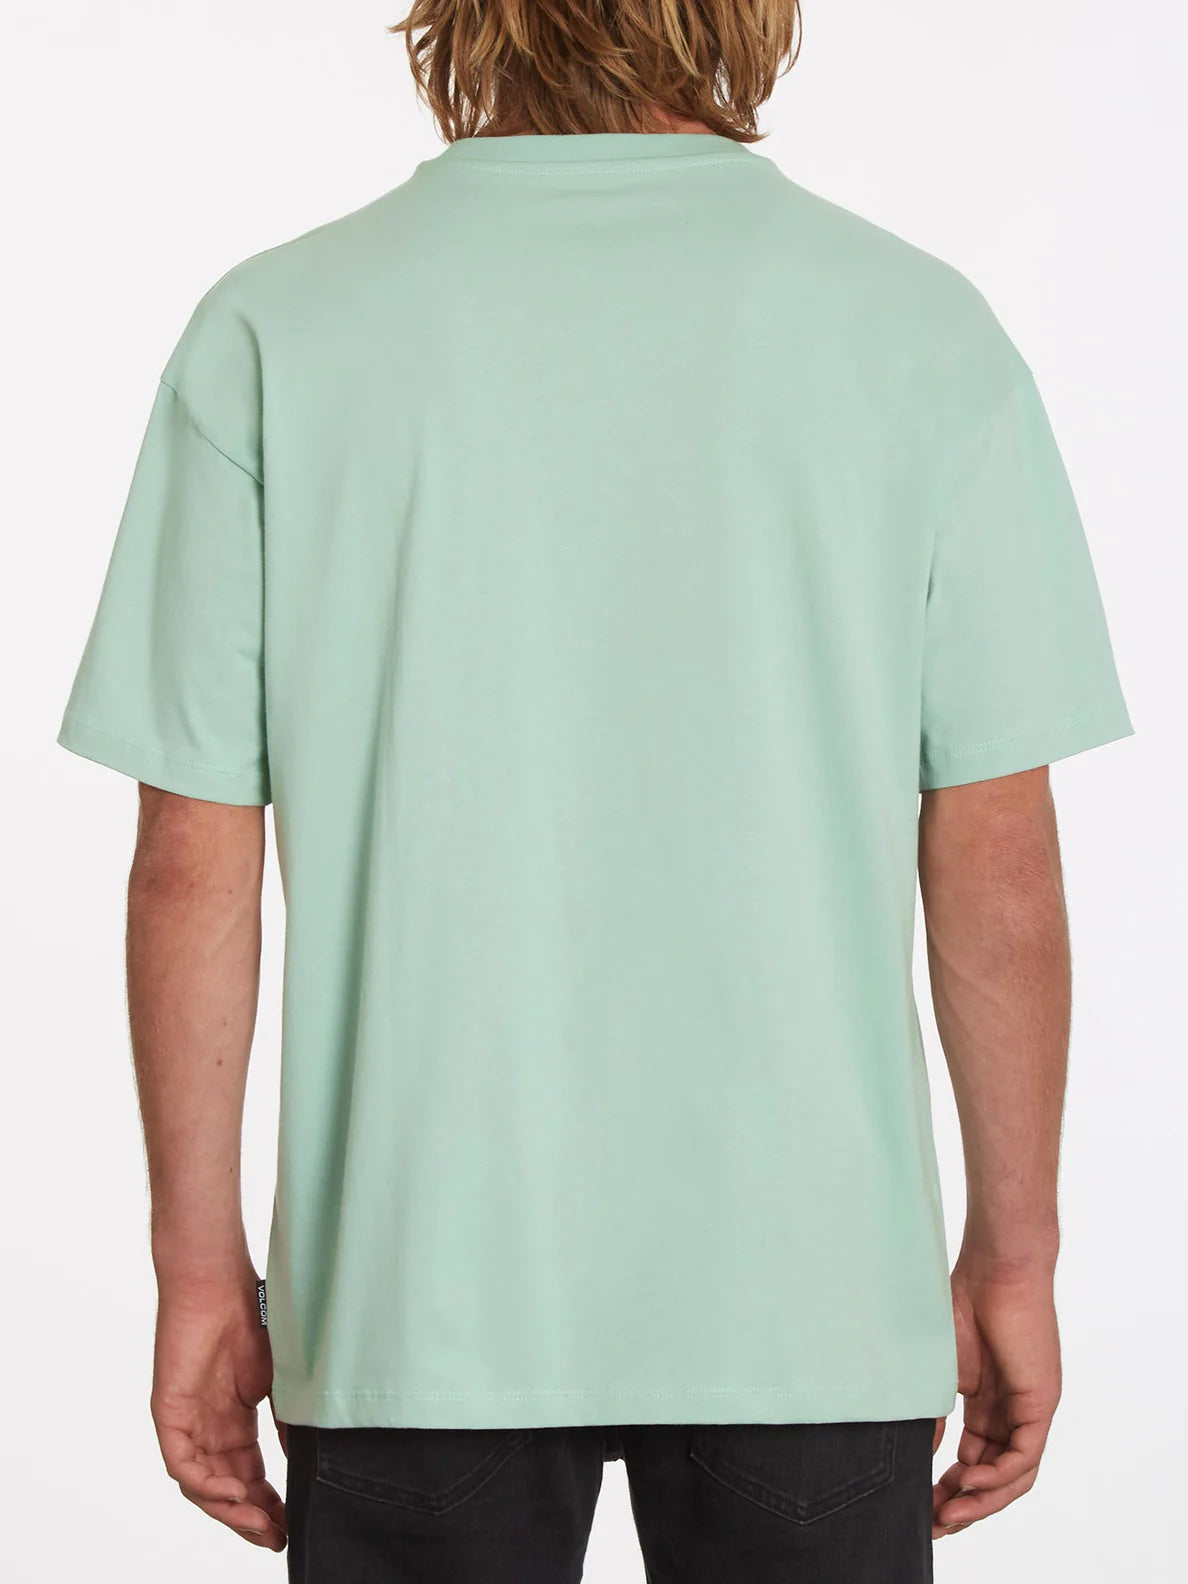 Camiseta Volcom Chrissie Abbott x French Lichen Green